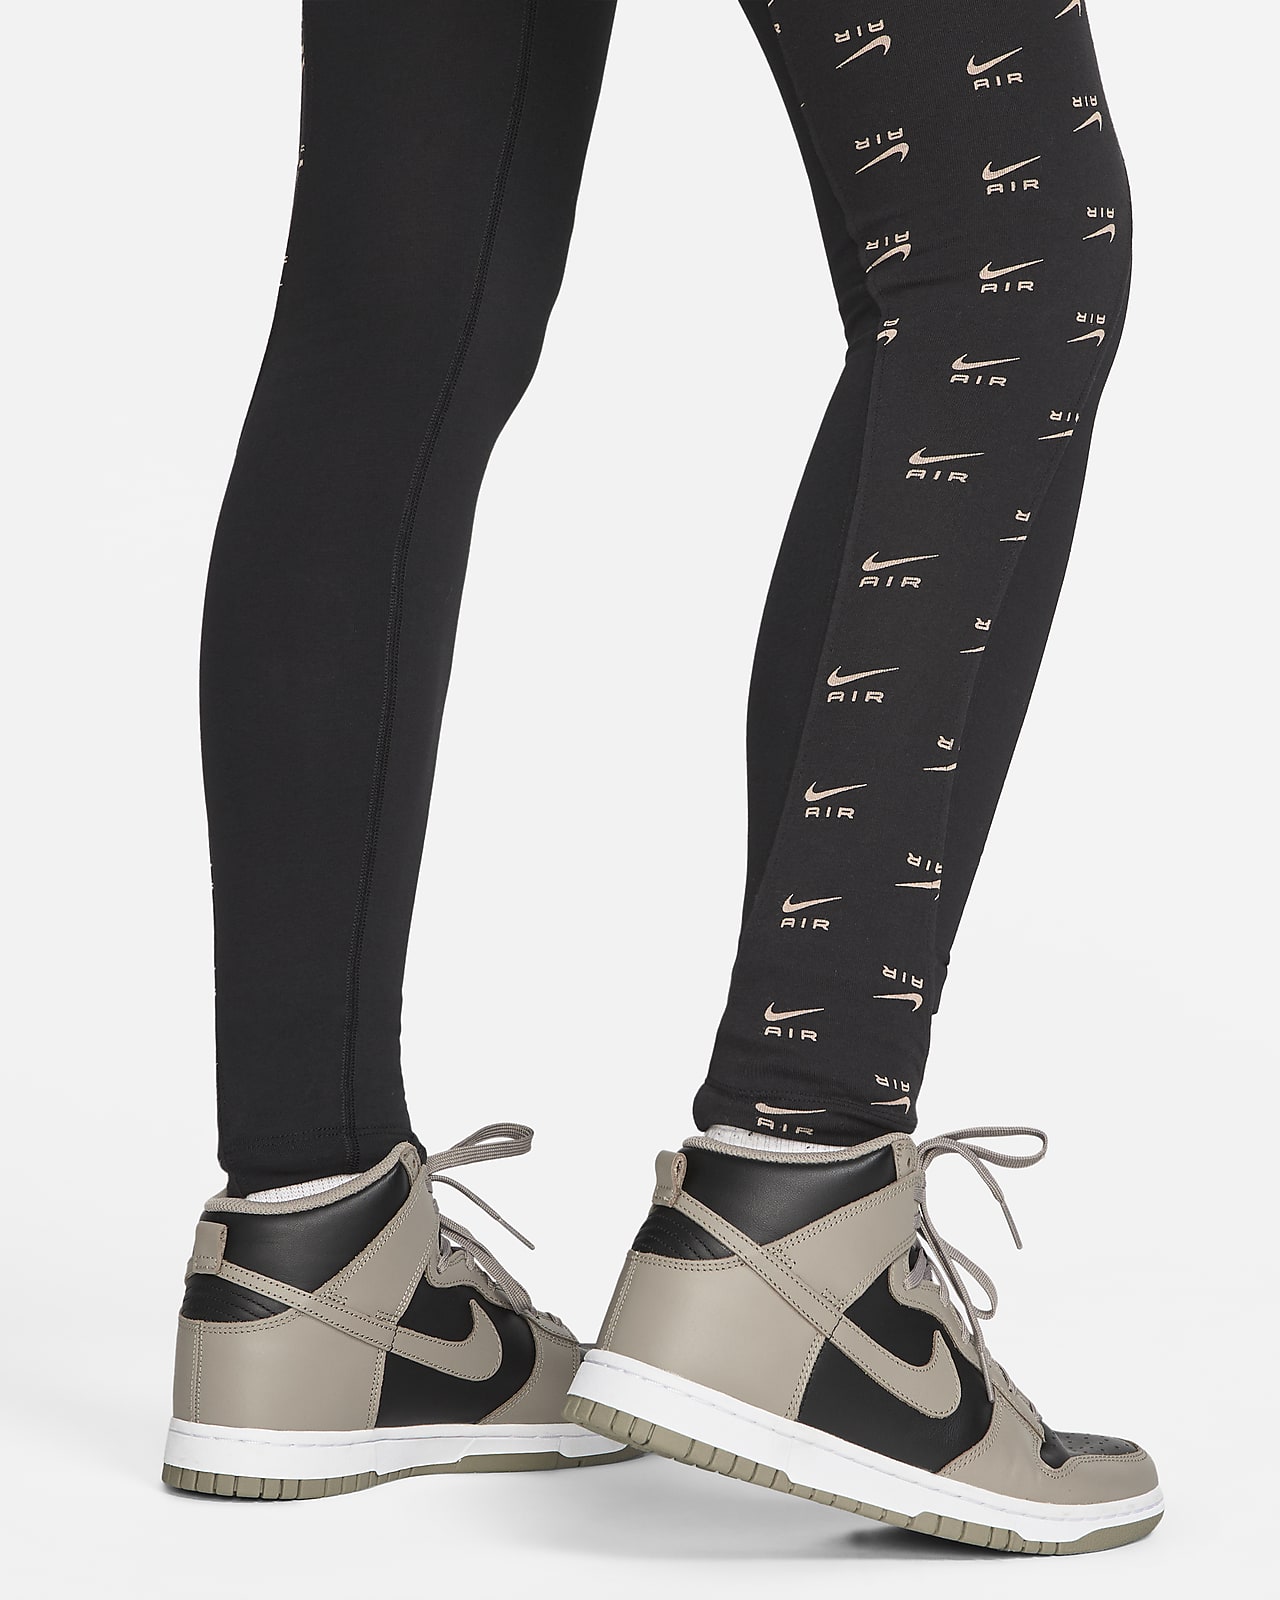 Nike Sportswear Air Women's High-Rise Leggings (Plus Size). UK